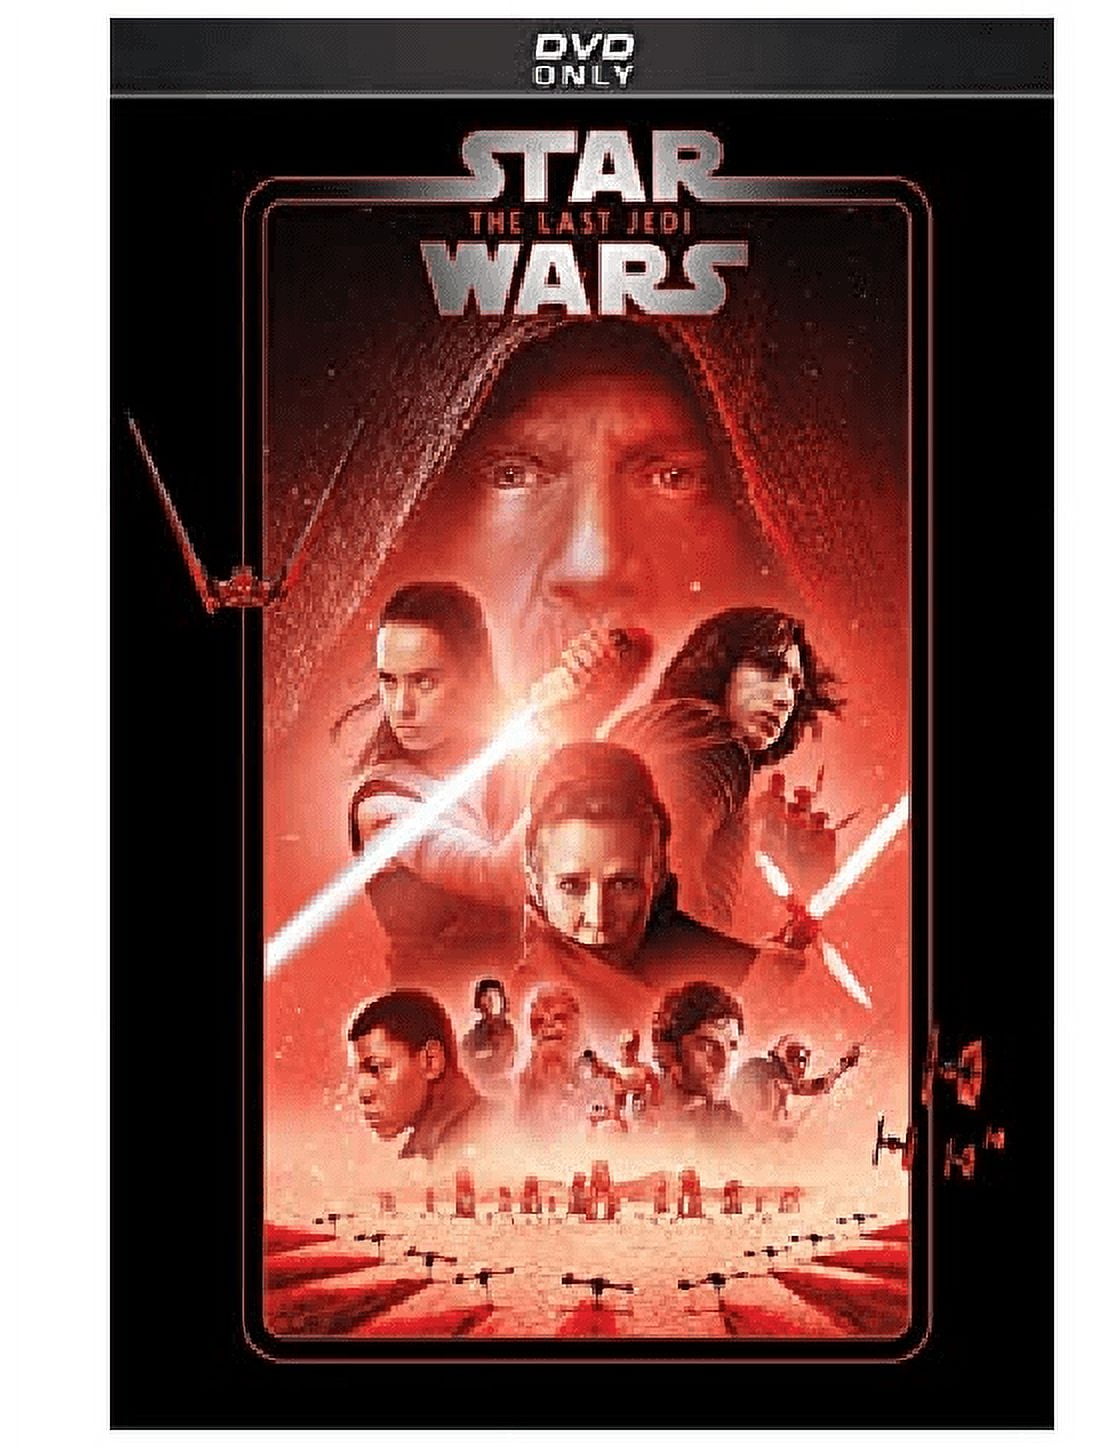 Star Wars: The Last Jedi,” Reviewed